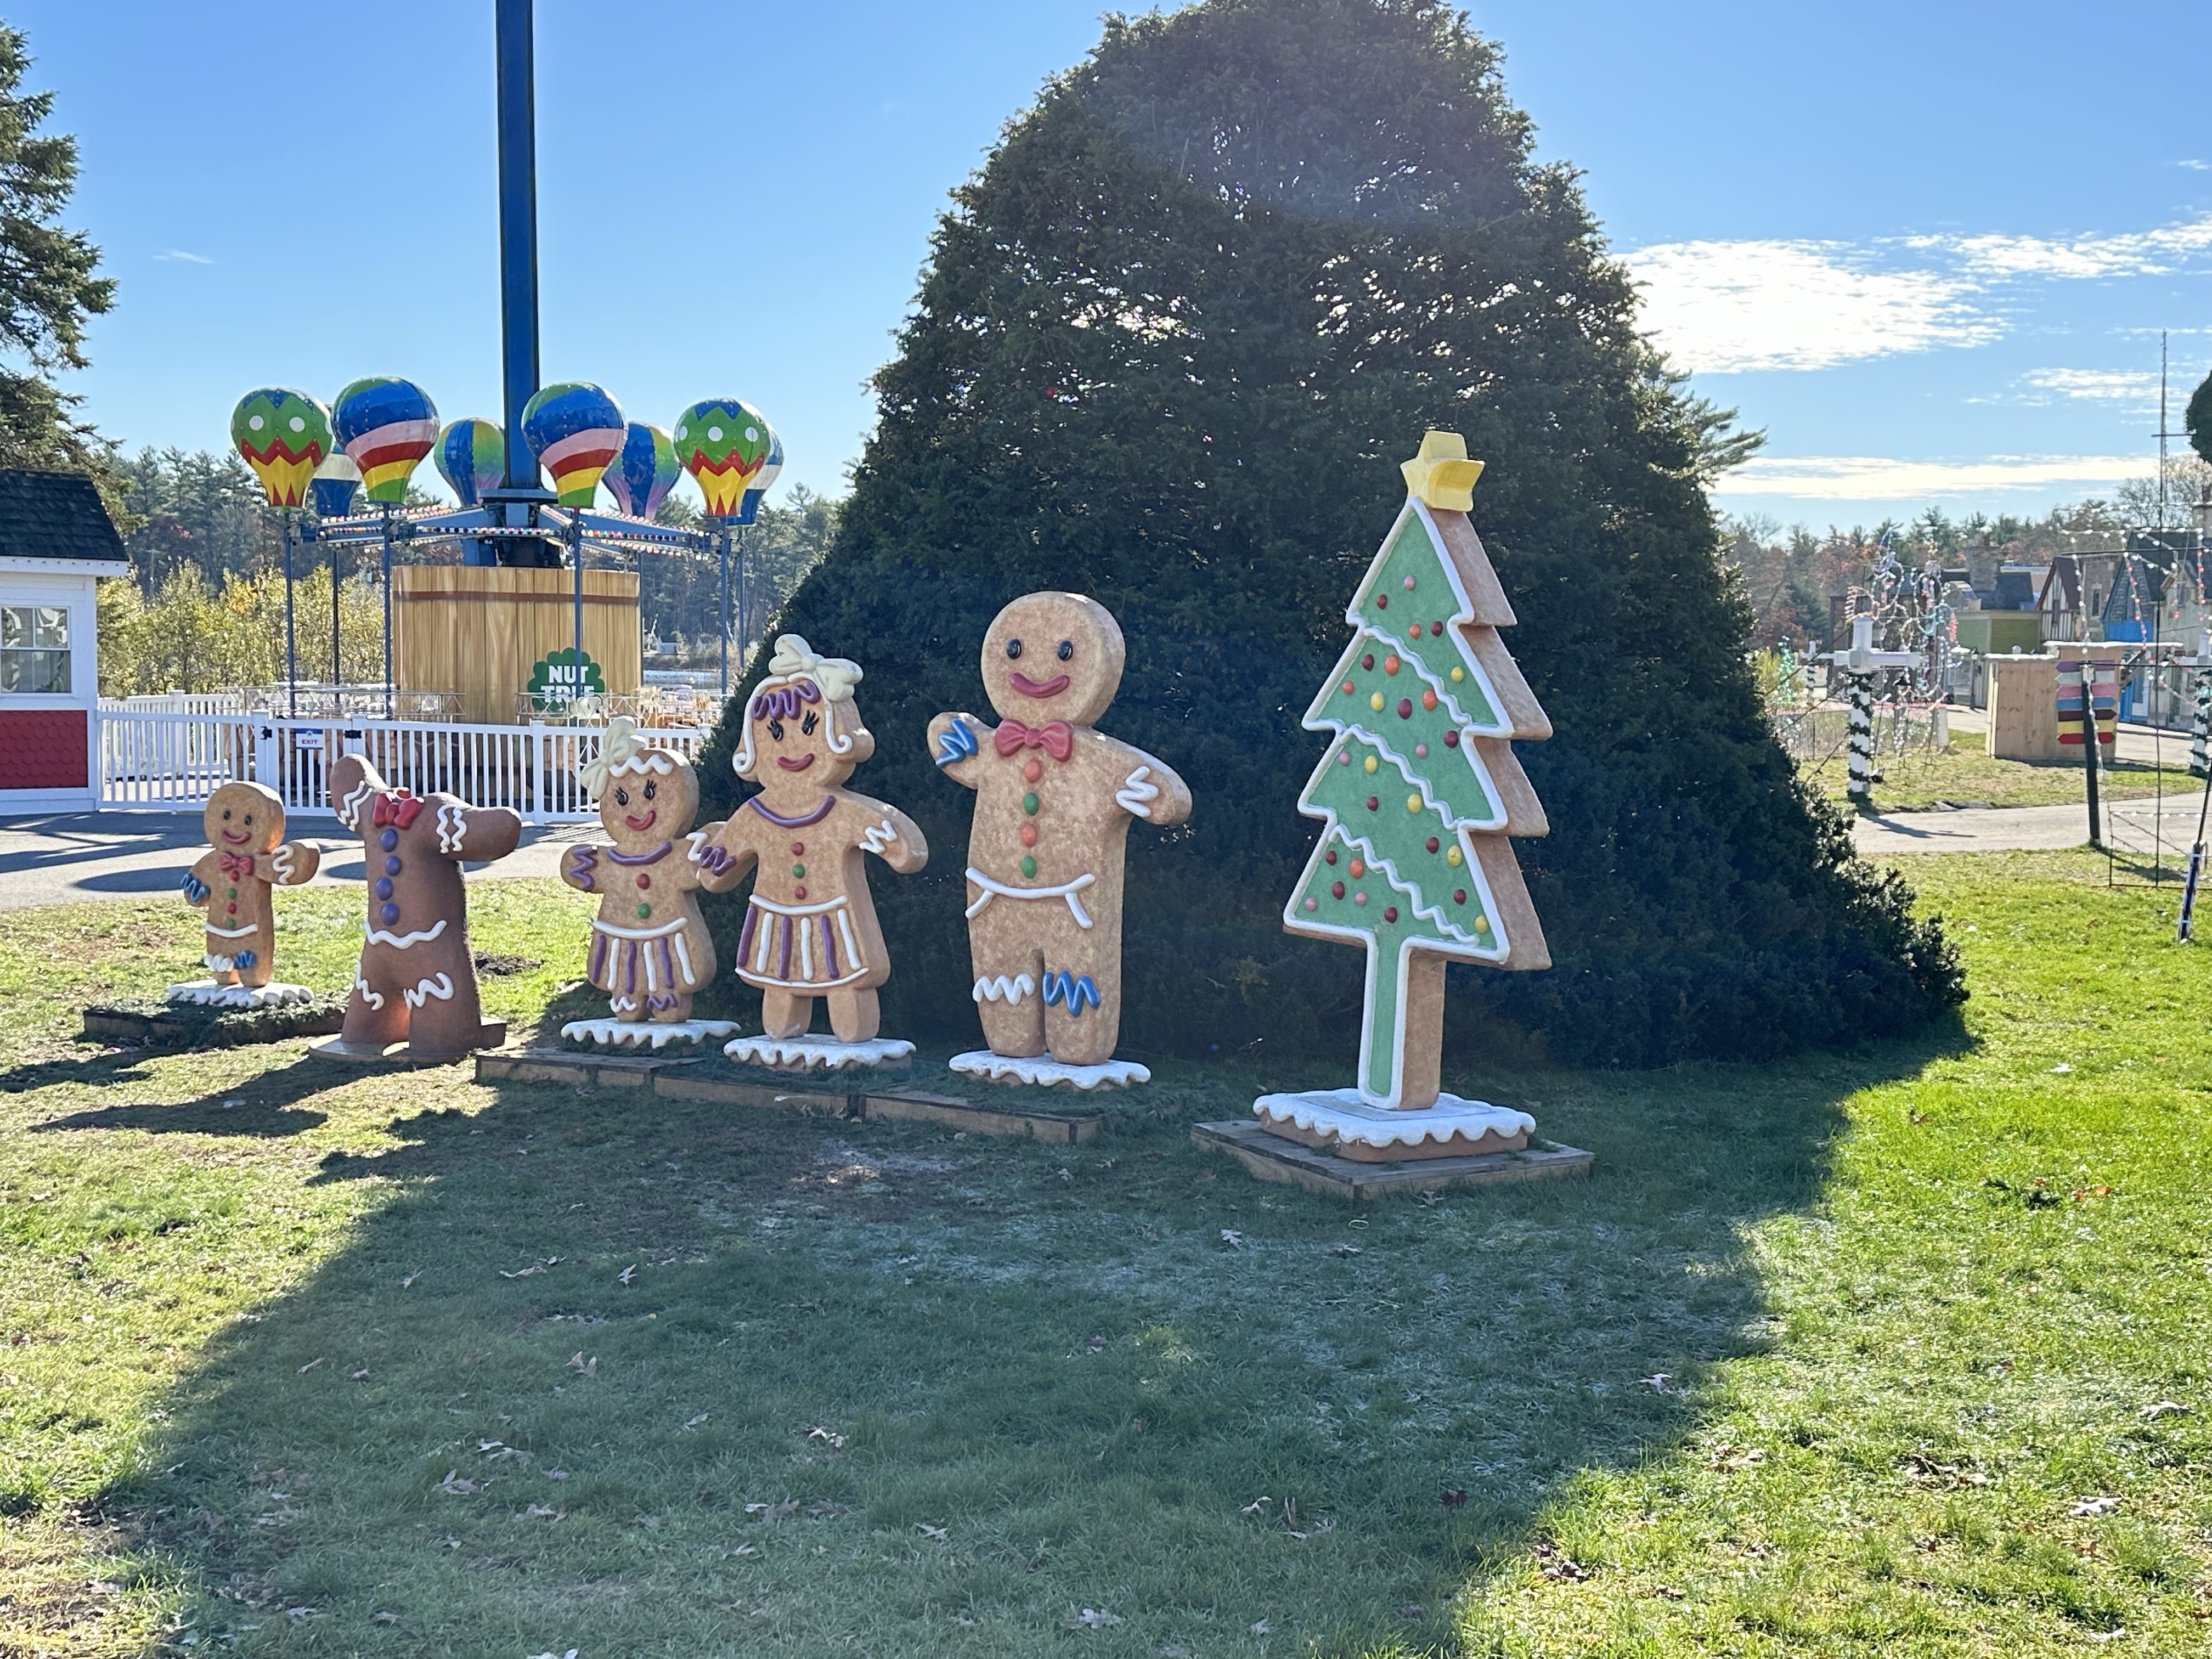 Edaville Family Theme Park in Carver, Massachusetts with kids